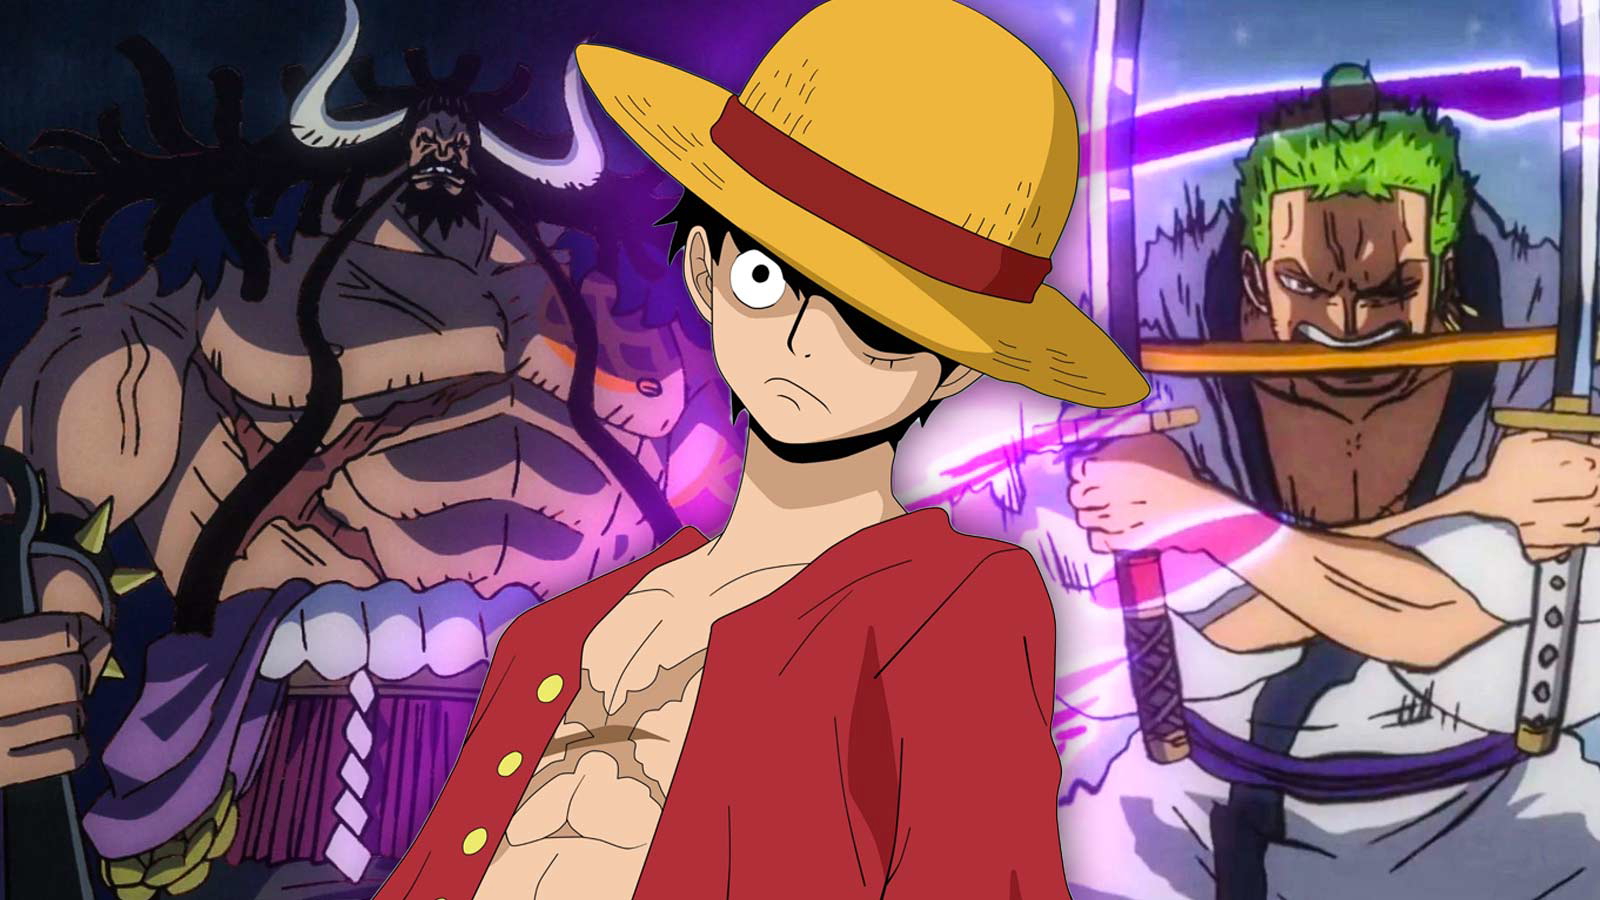 “No conqueror’s Haki?”: Eiichiro Oda Has One Piece Fans Questioning Kaido’s Statement About Zoro Having the Conqueror’s Haki